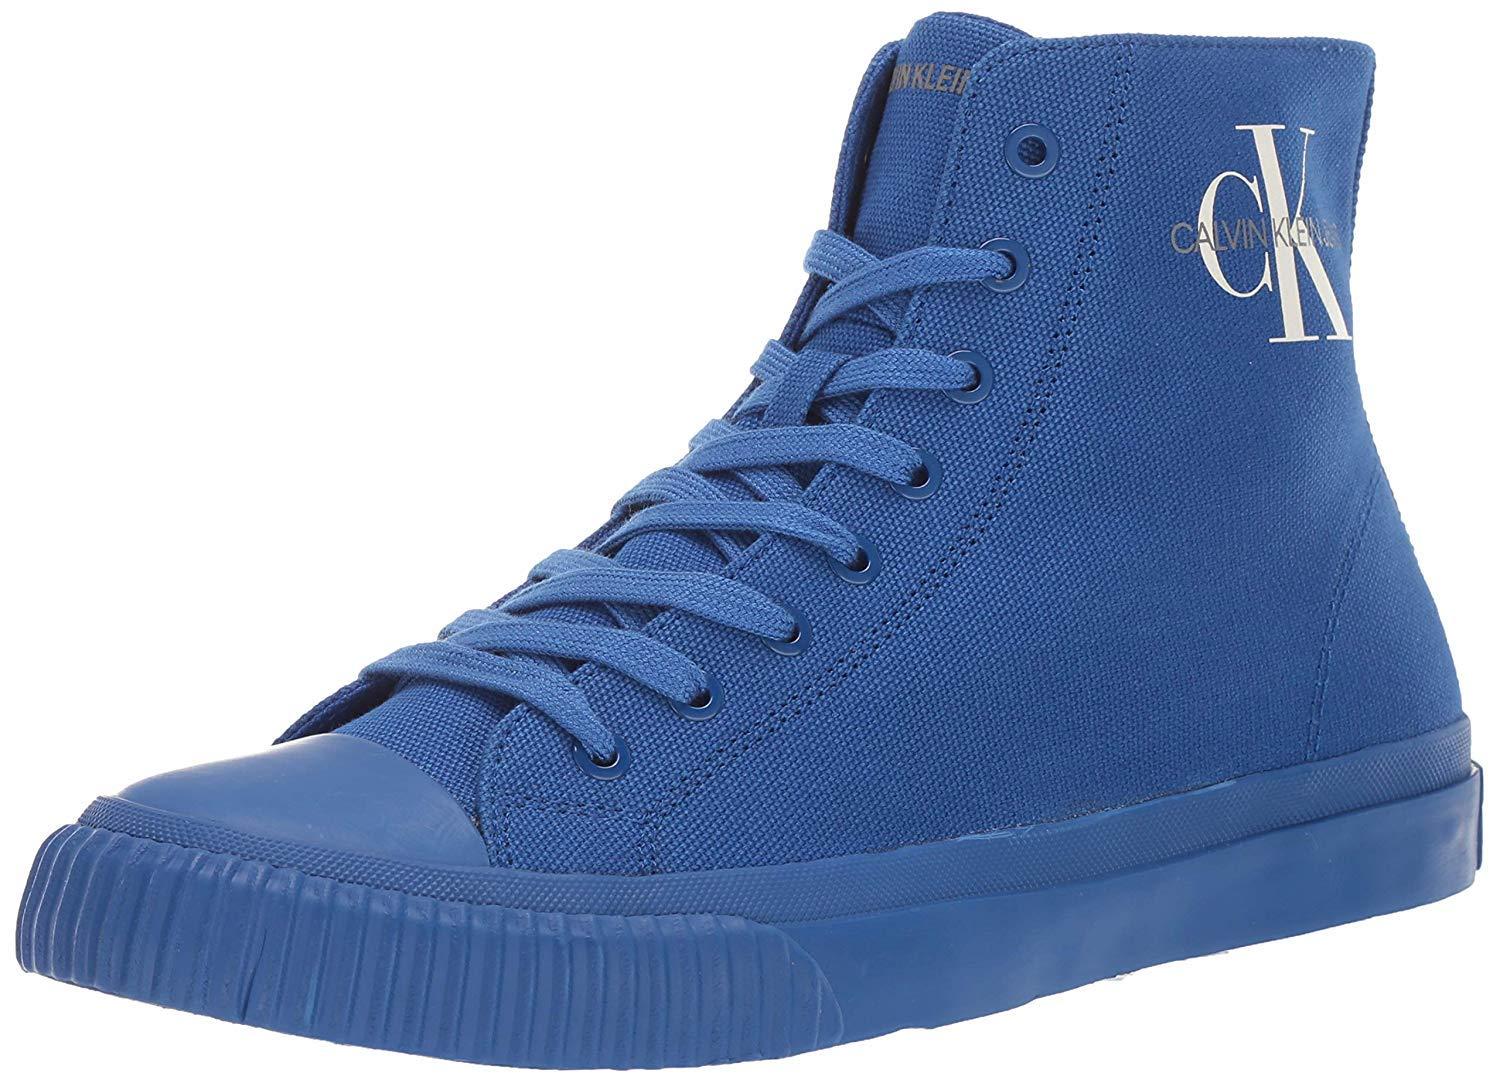 Calvin Klein Denim Ck Jeans Icaro Shoe in Blue for Men - Save 25% - Lyst